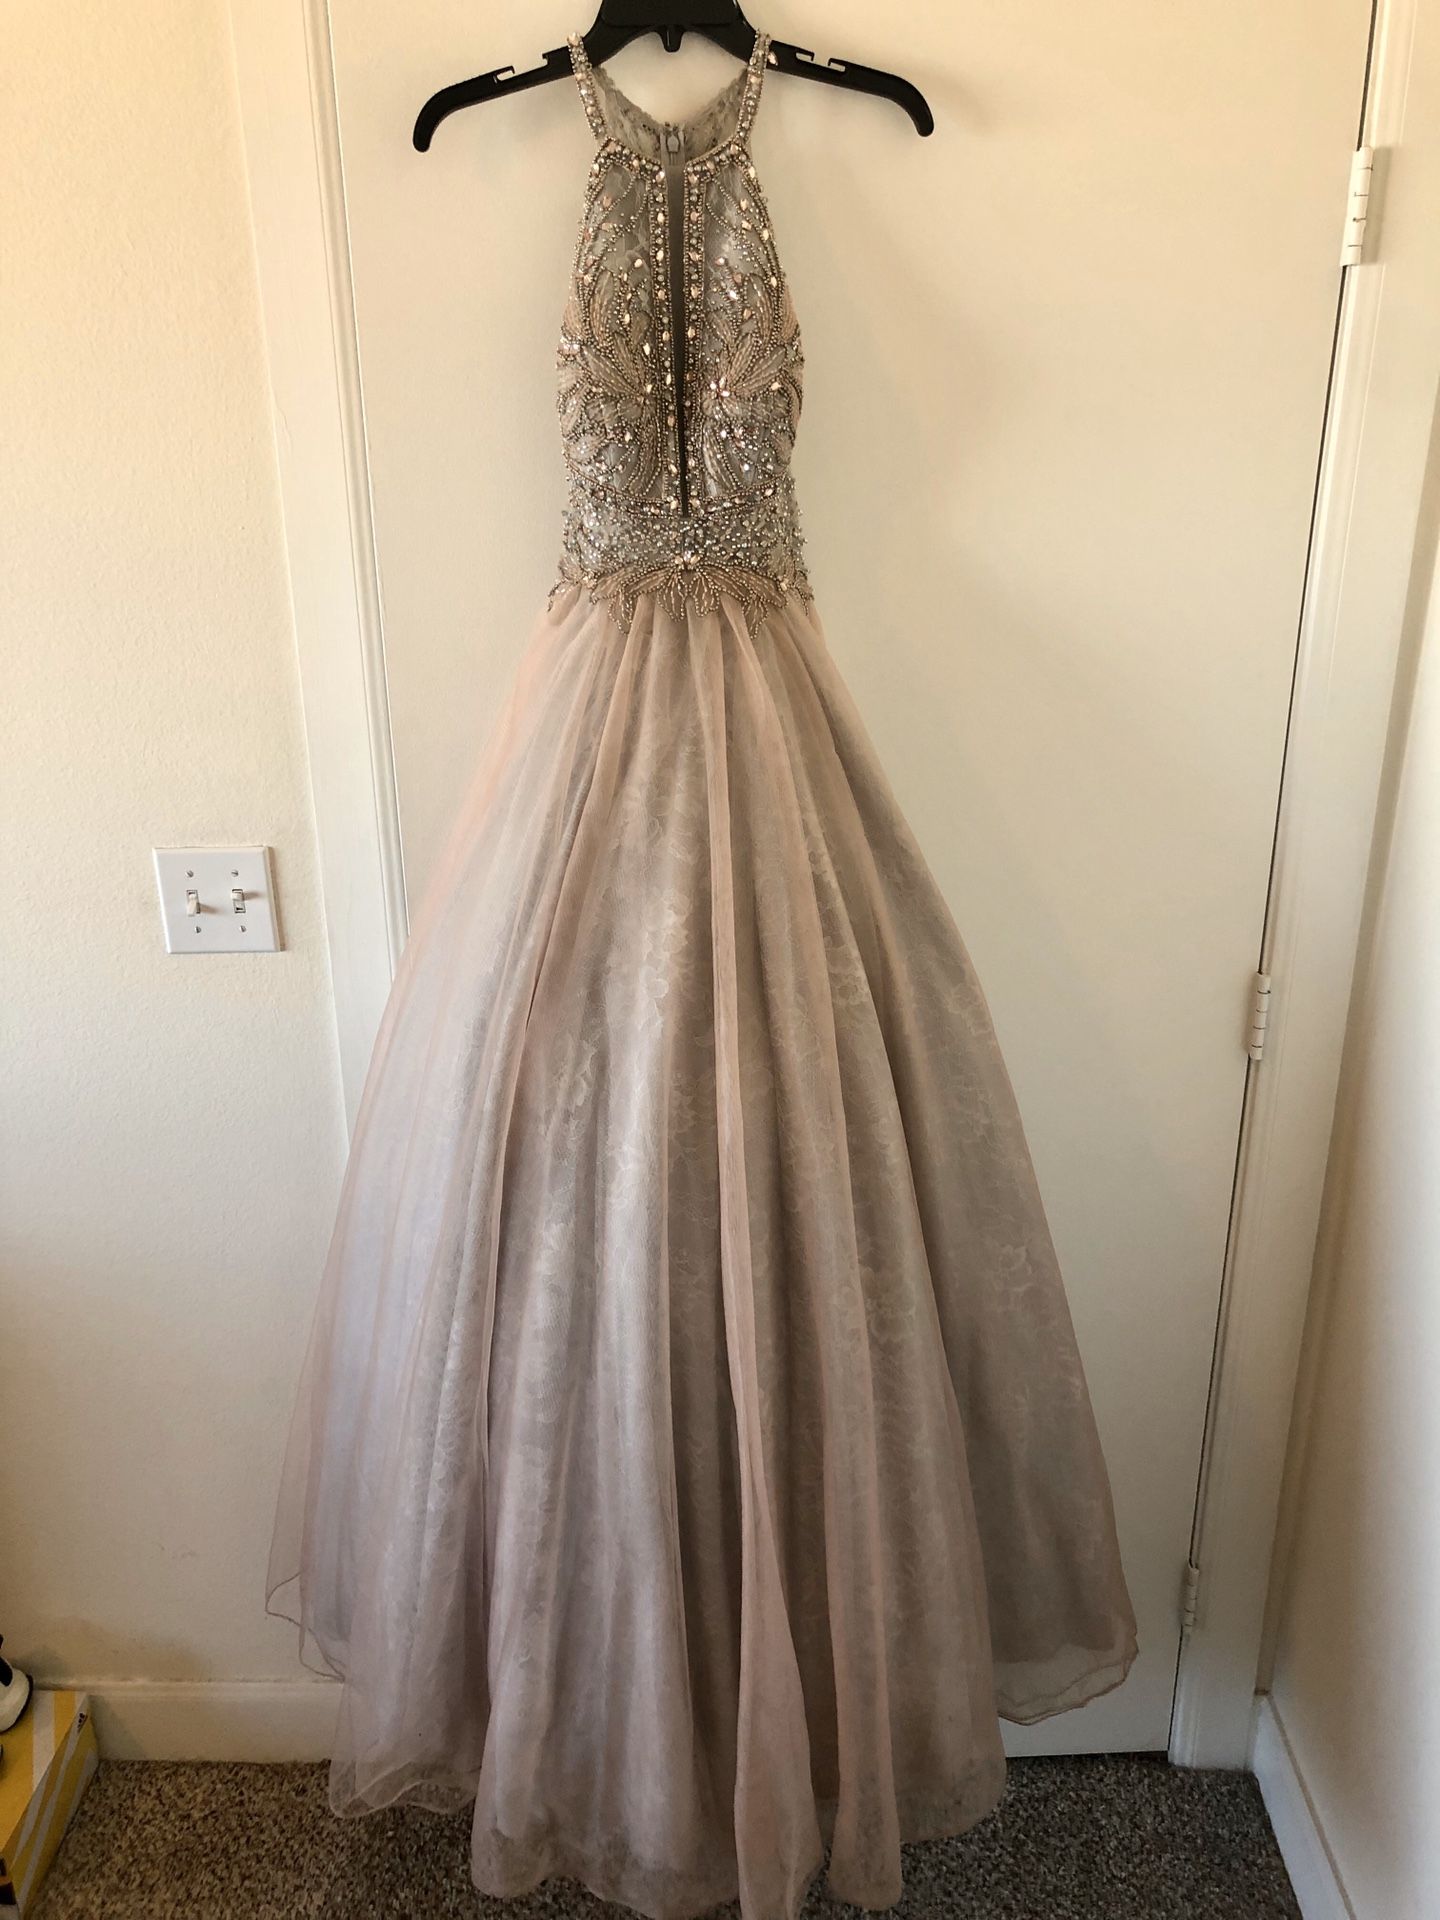 Engagement Dress - Prom Dress - Long Evening Dress - Size 2